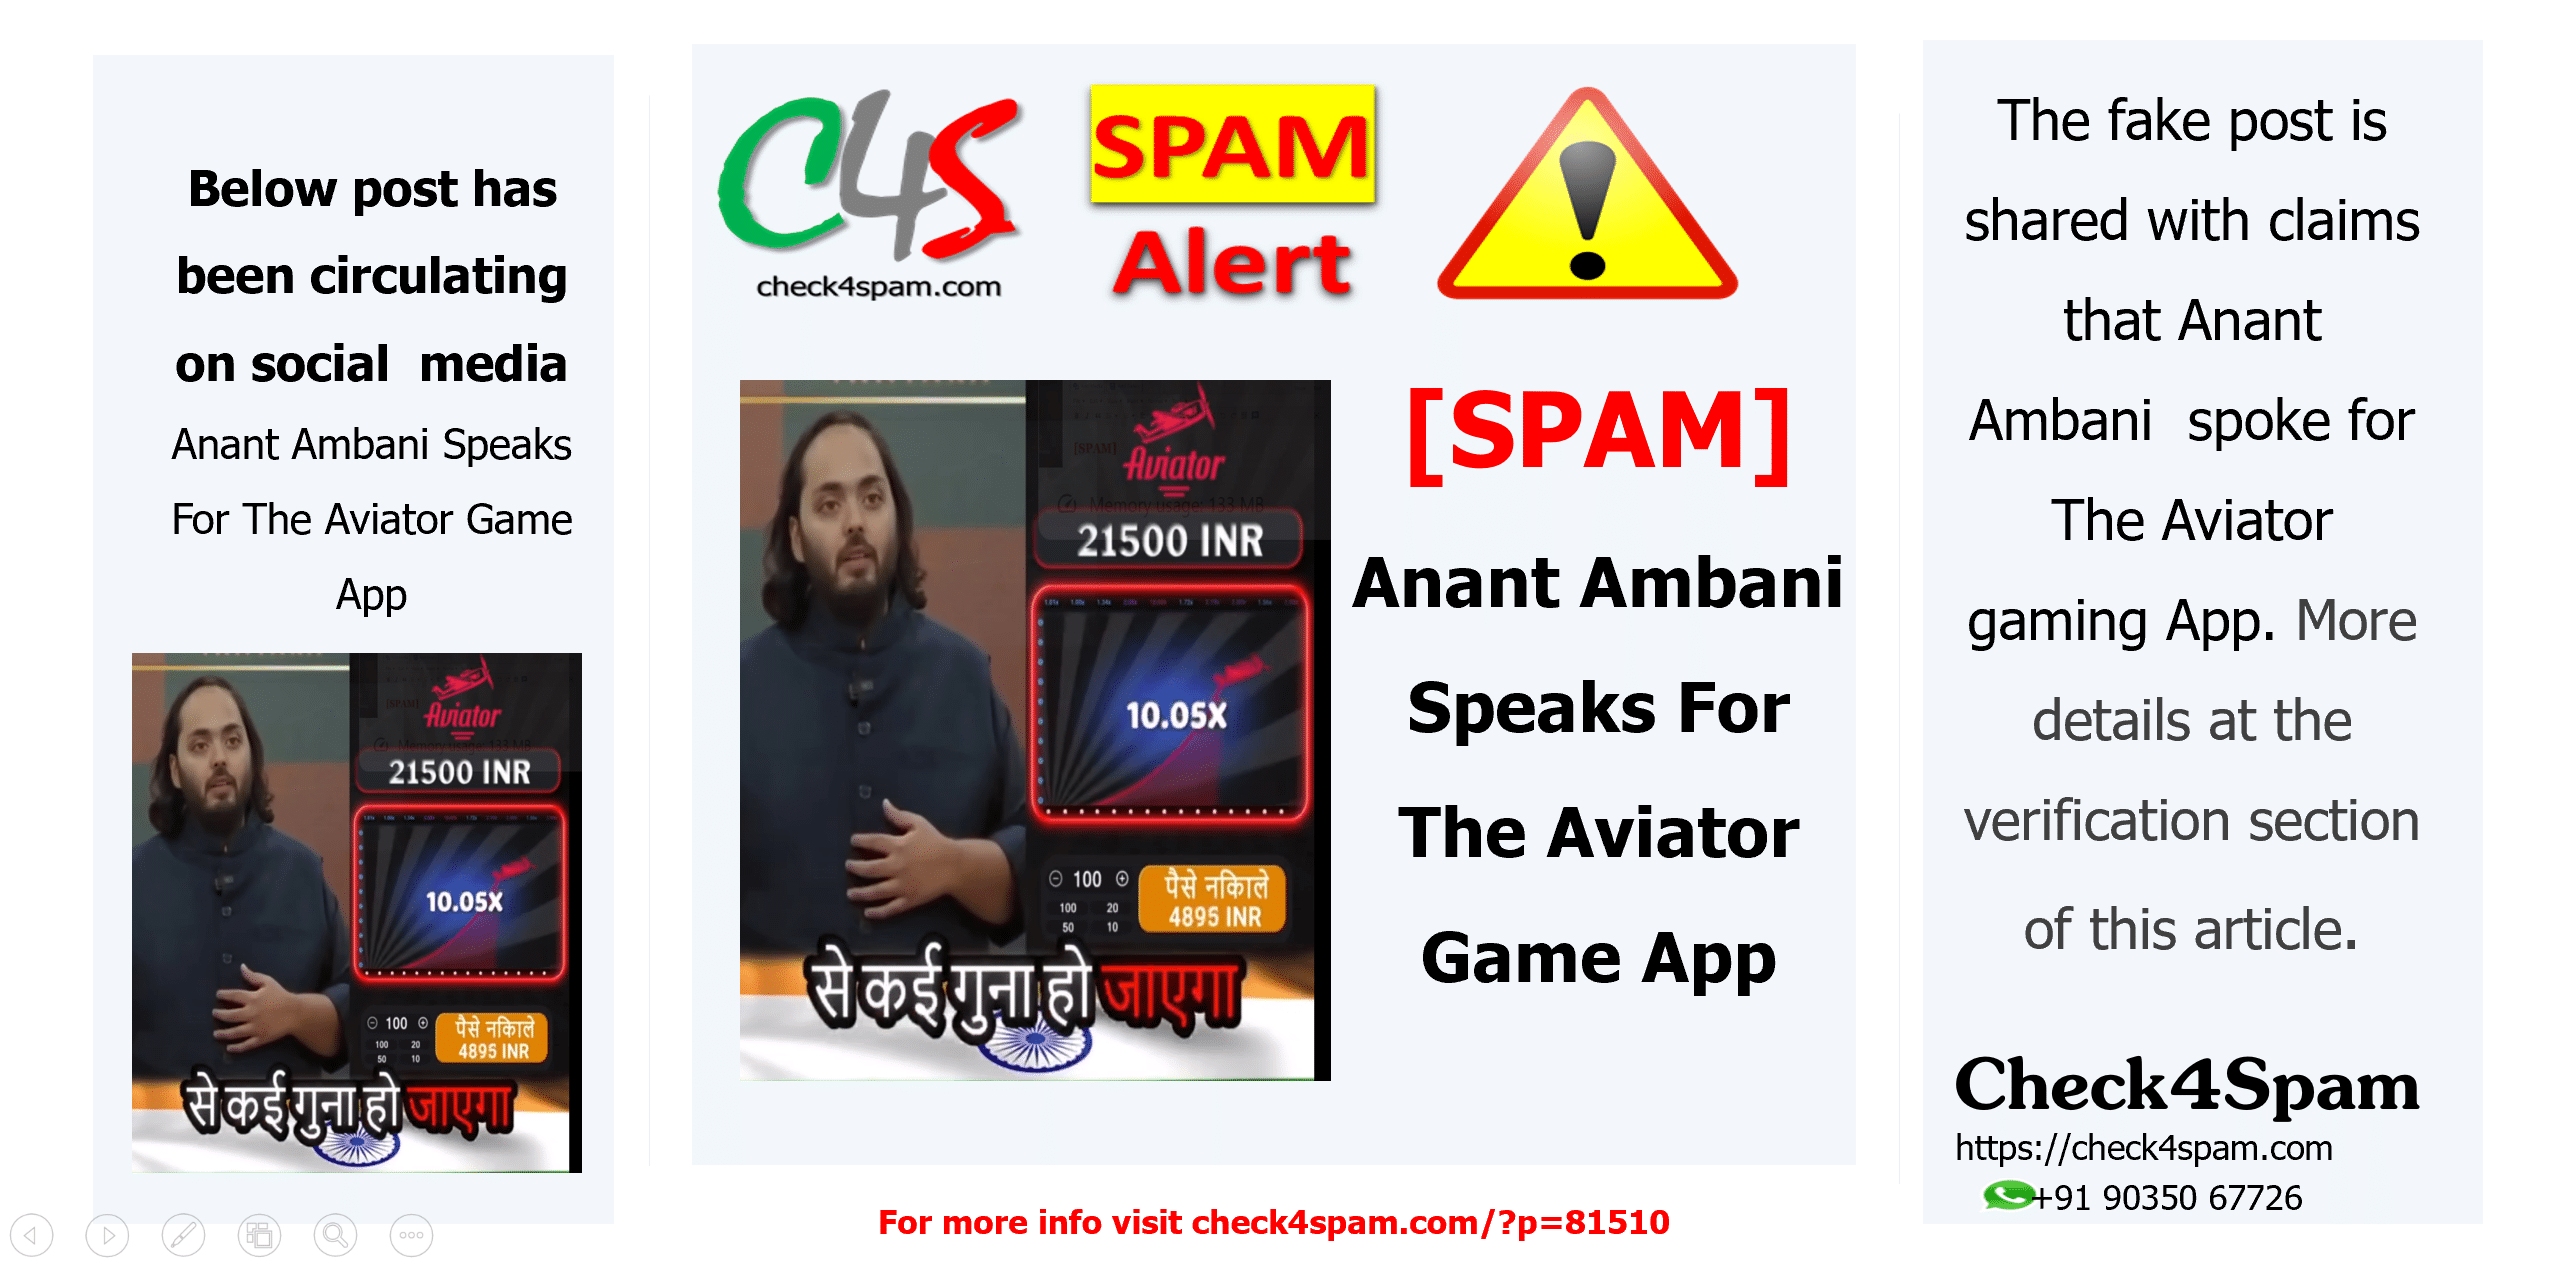 Anant Ambani Speaks For The Aviator Game